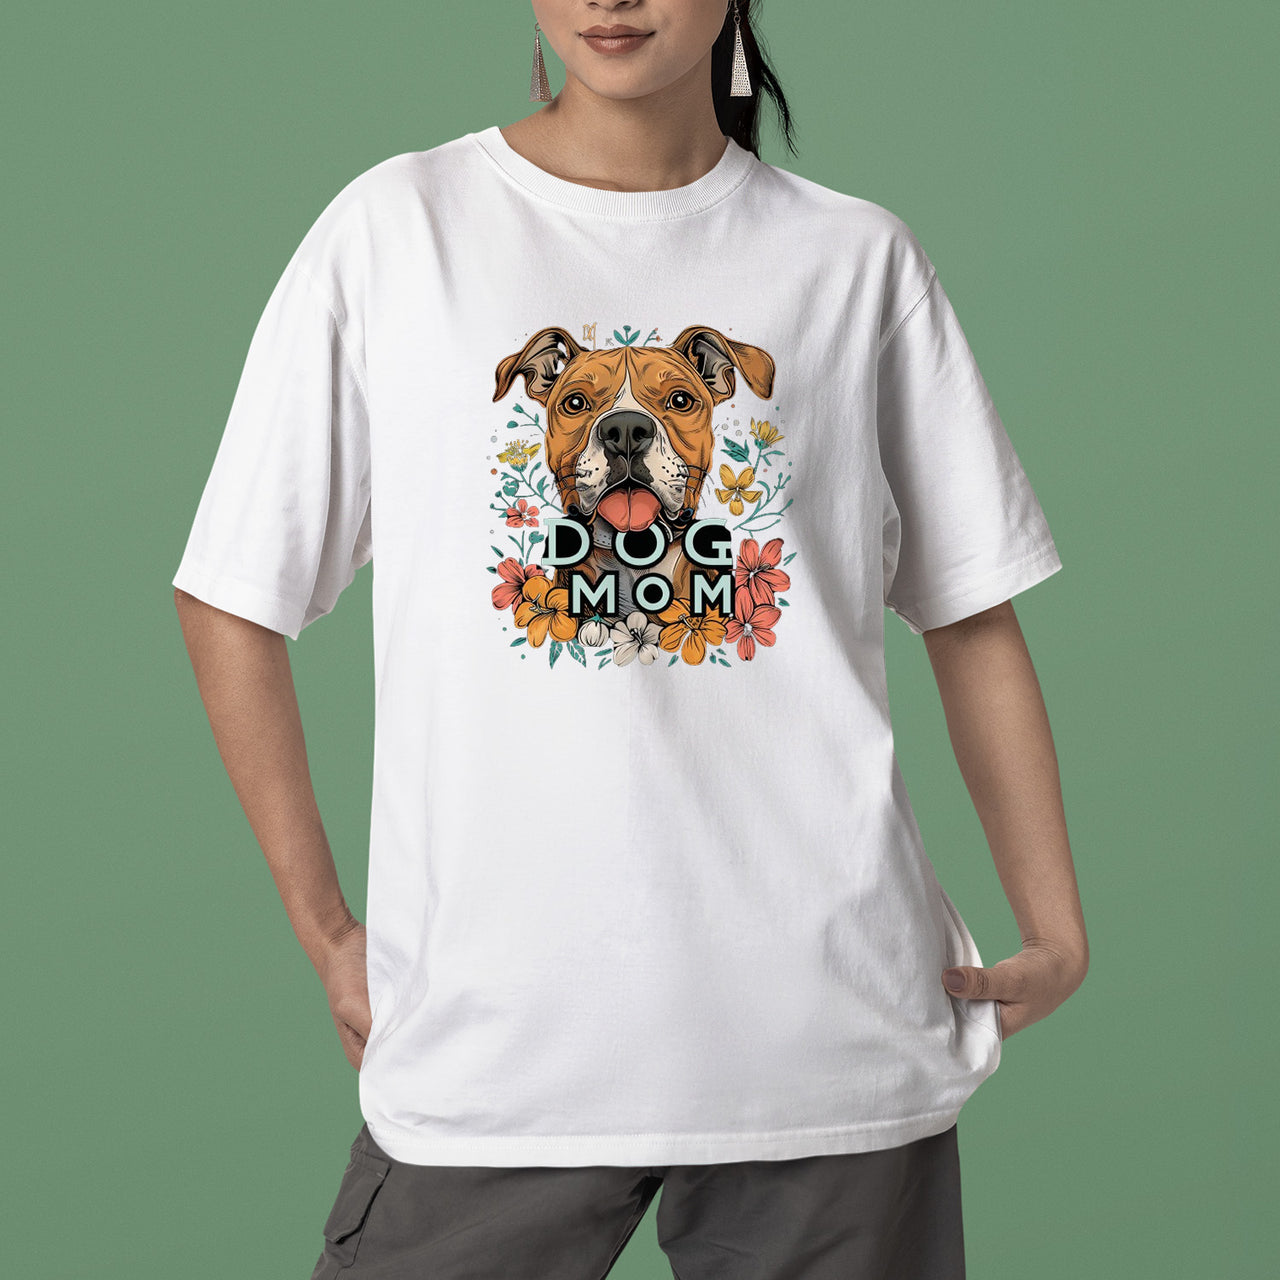 Pit Pull Dog T-shirt, Pet Lover Shirt, Dog Lover Shirt, Dog Mom T-Shirt, Dog Owner Shirt, Gift For Dog Mom, Funny Dog Shirts, Women Dog T-Shirt, Mother's Day Gift, Dog Lover Wife Gifts, Dog Shirt